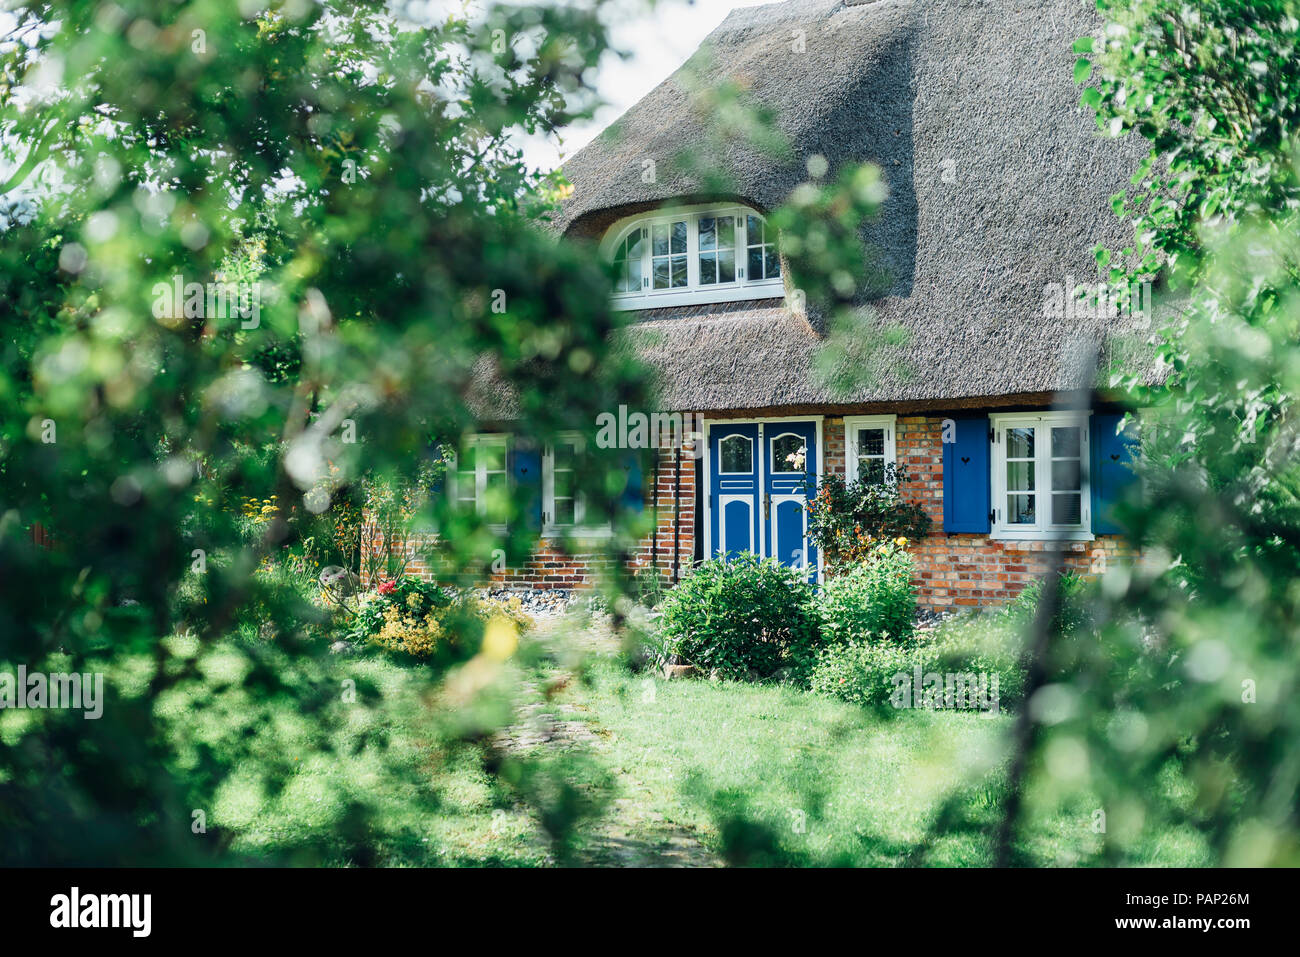 Germany, Ruegen, Middelhagen, Moenchgut, thatched-roof house Stock Photo